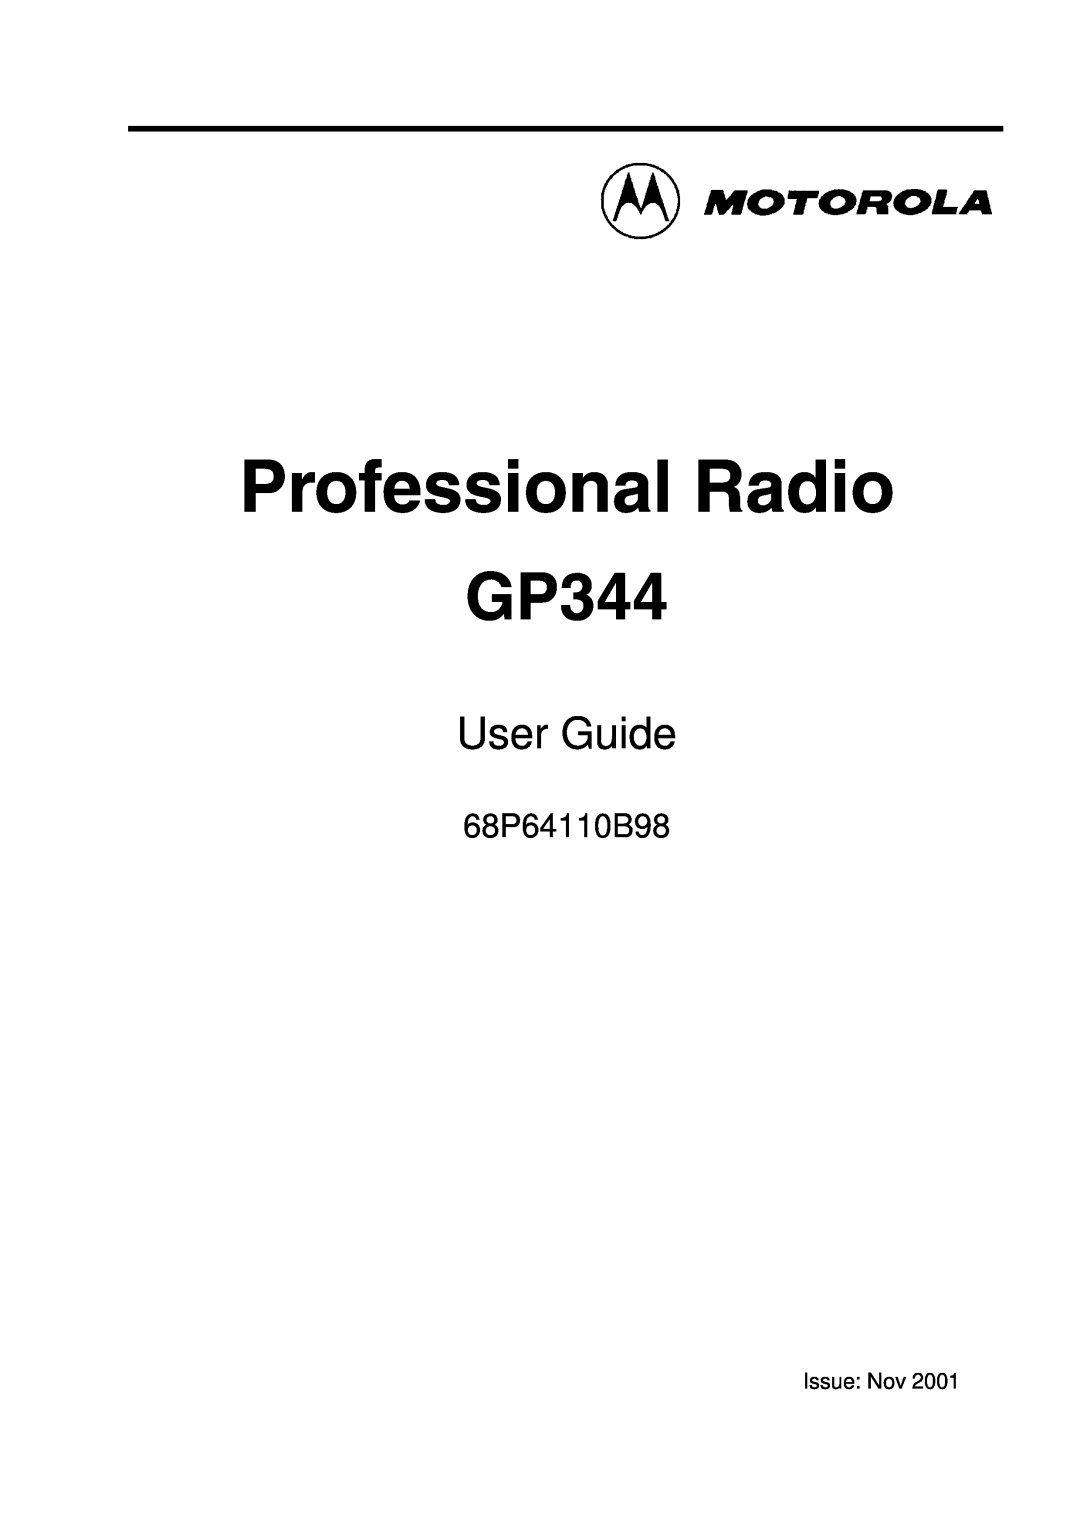 Motorola GP344 manual Professional Radio, User Guide, 68P64110B98, Issue Nov 